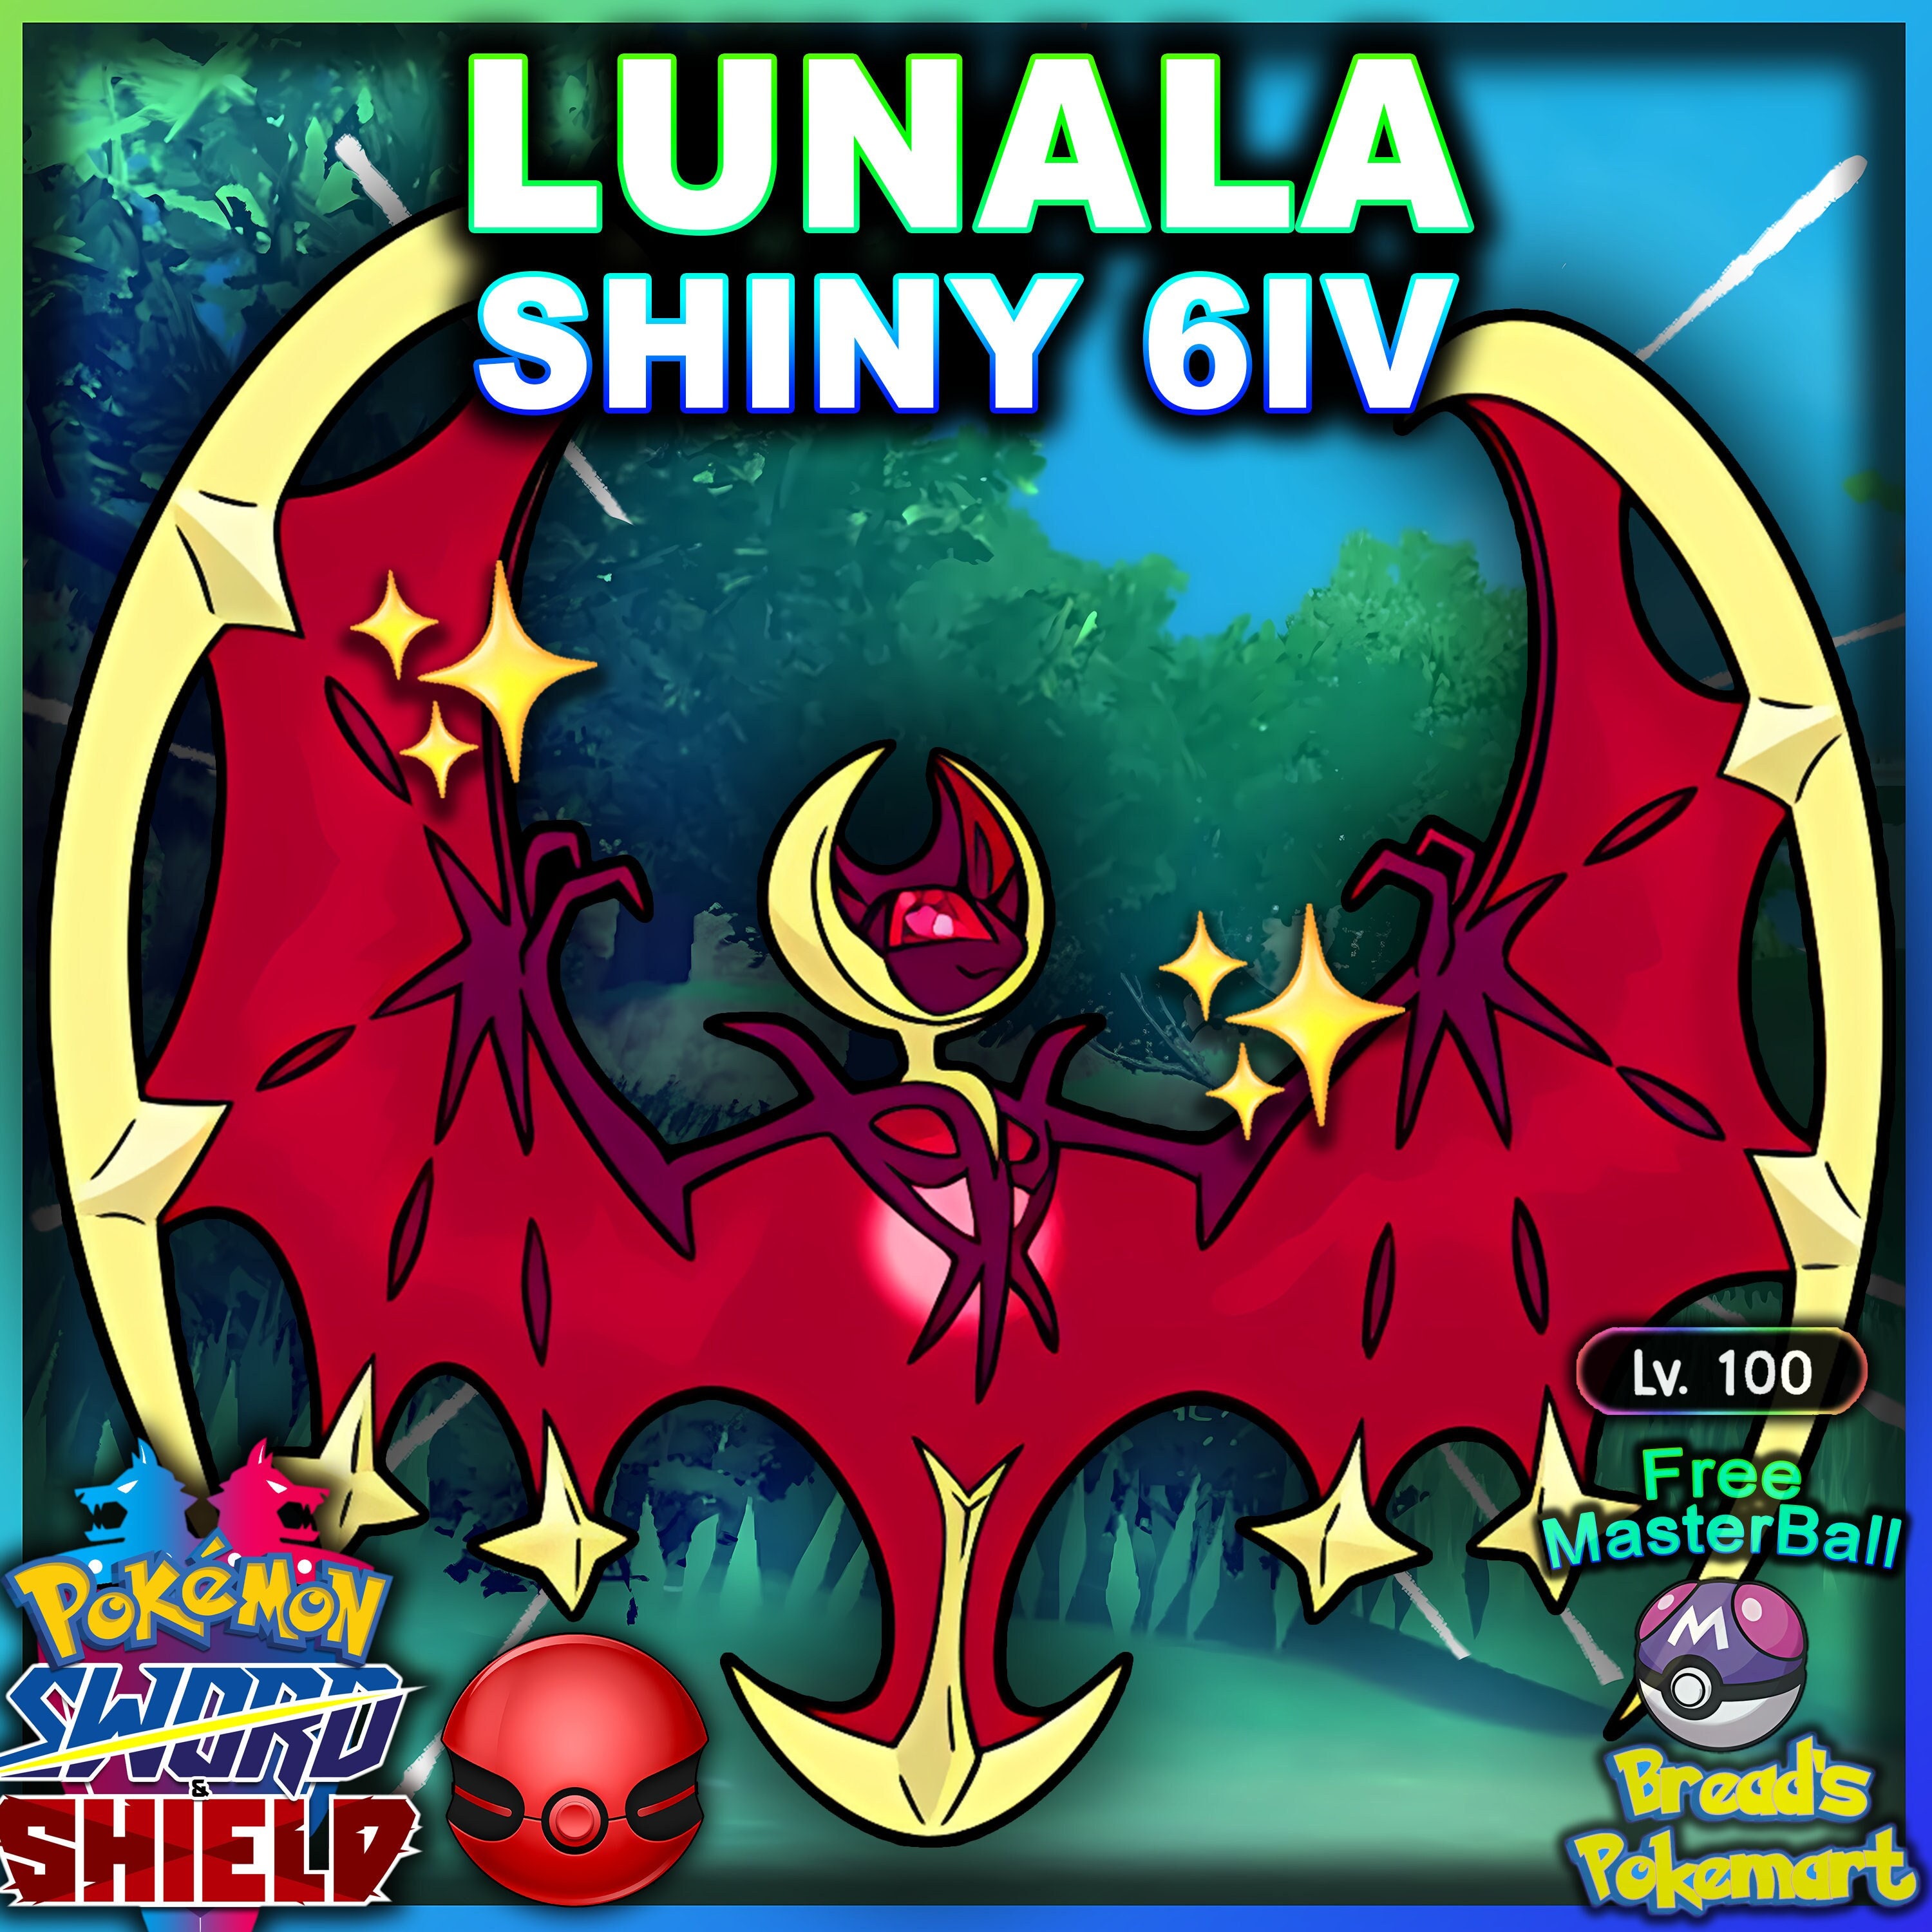 Shiny Lunala Event Pokemon for Pokemon For Sword & Shield on Switch